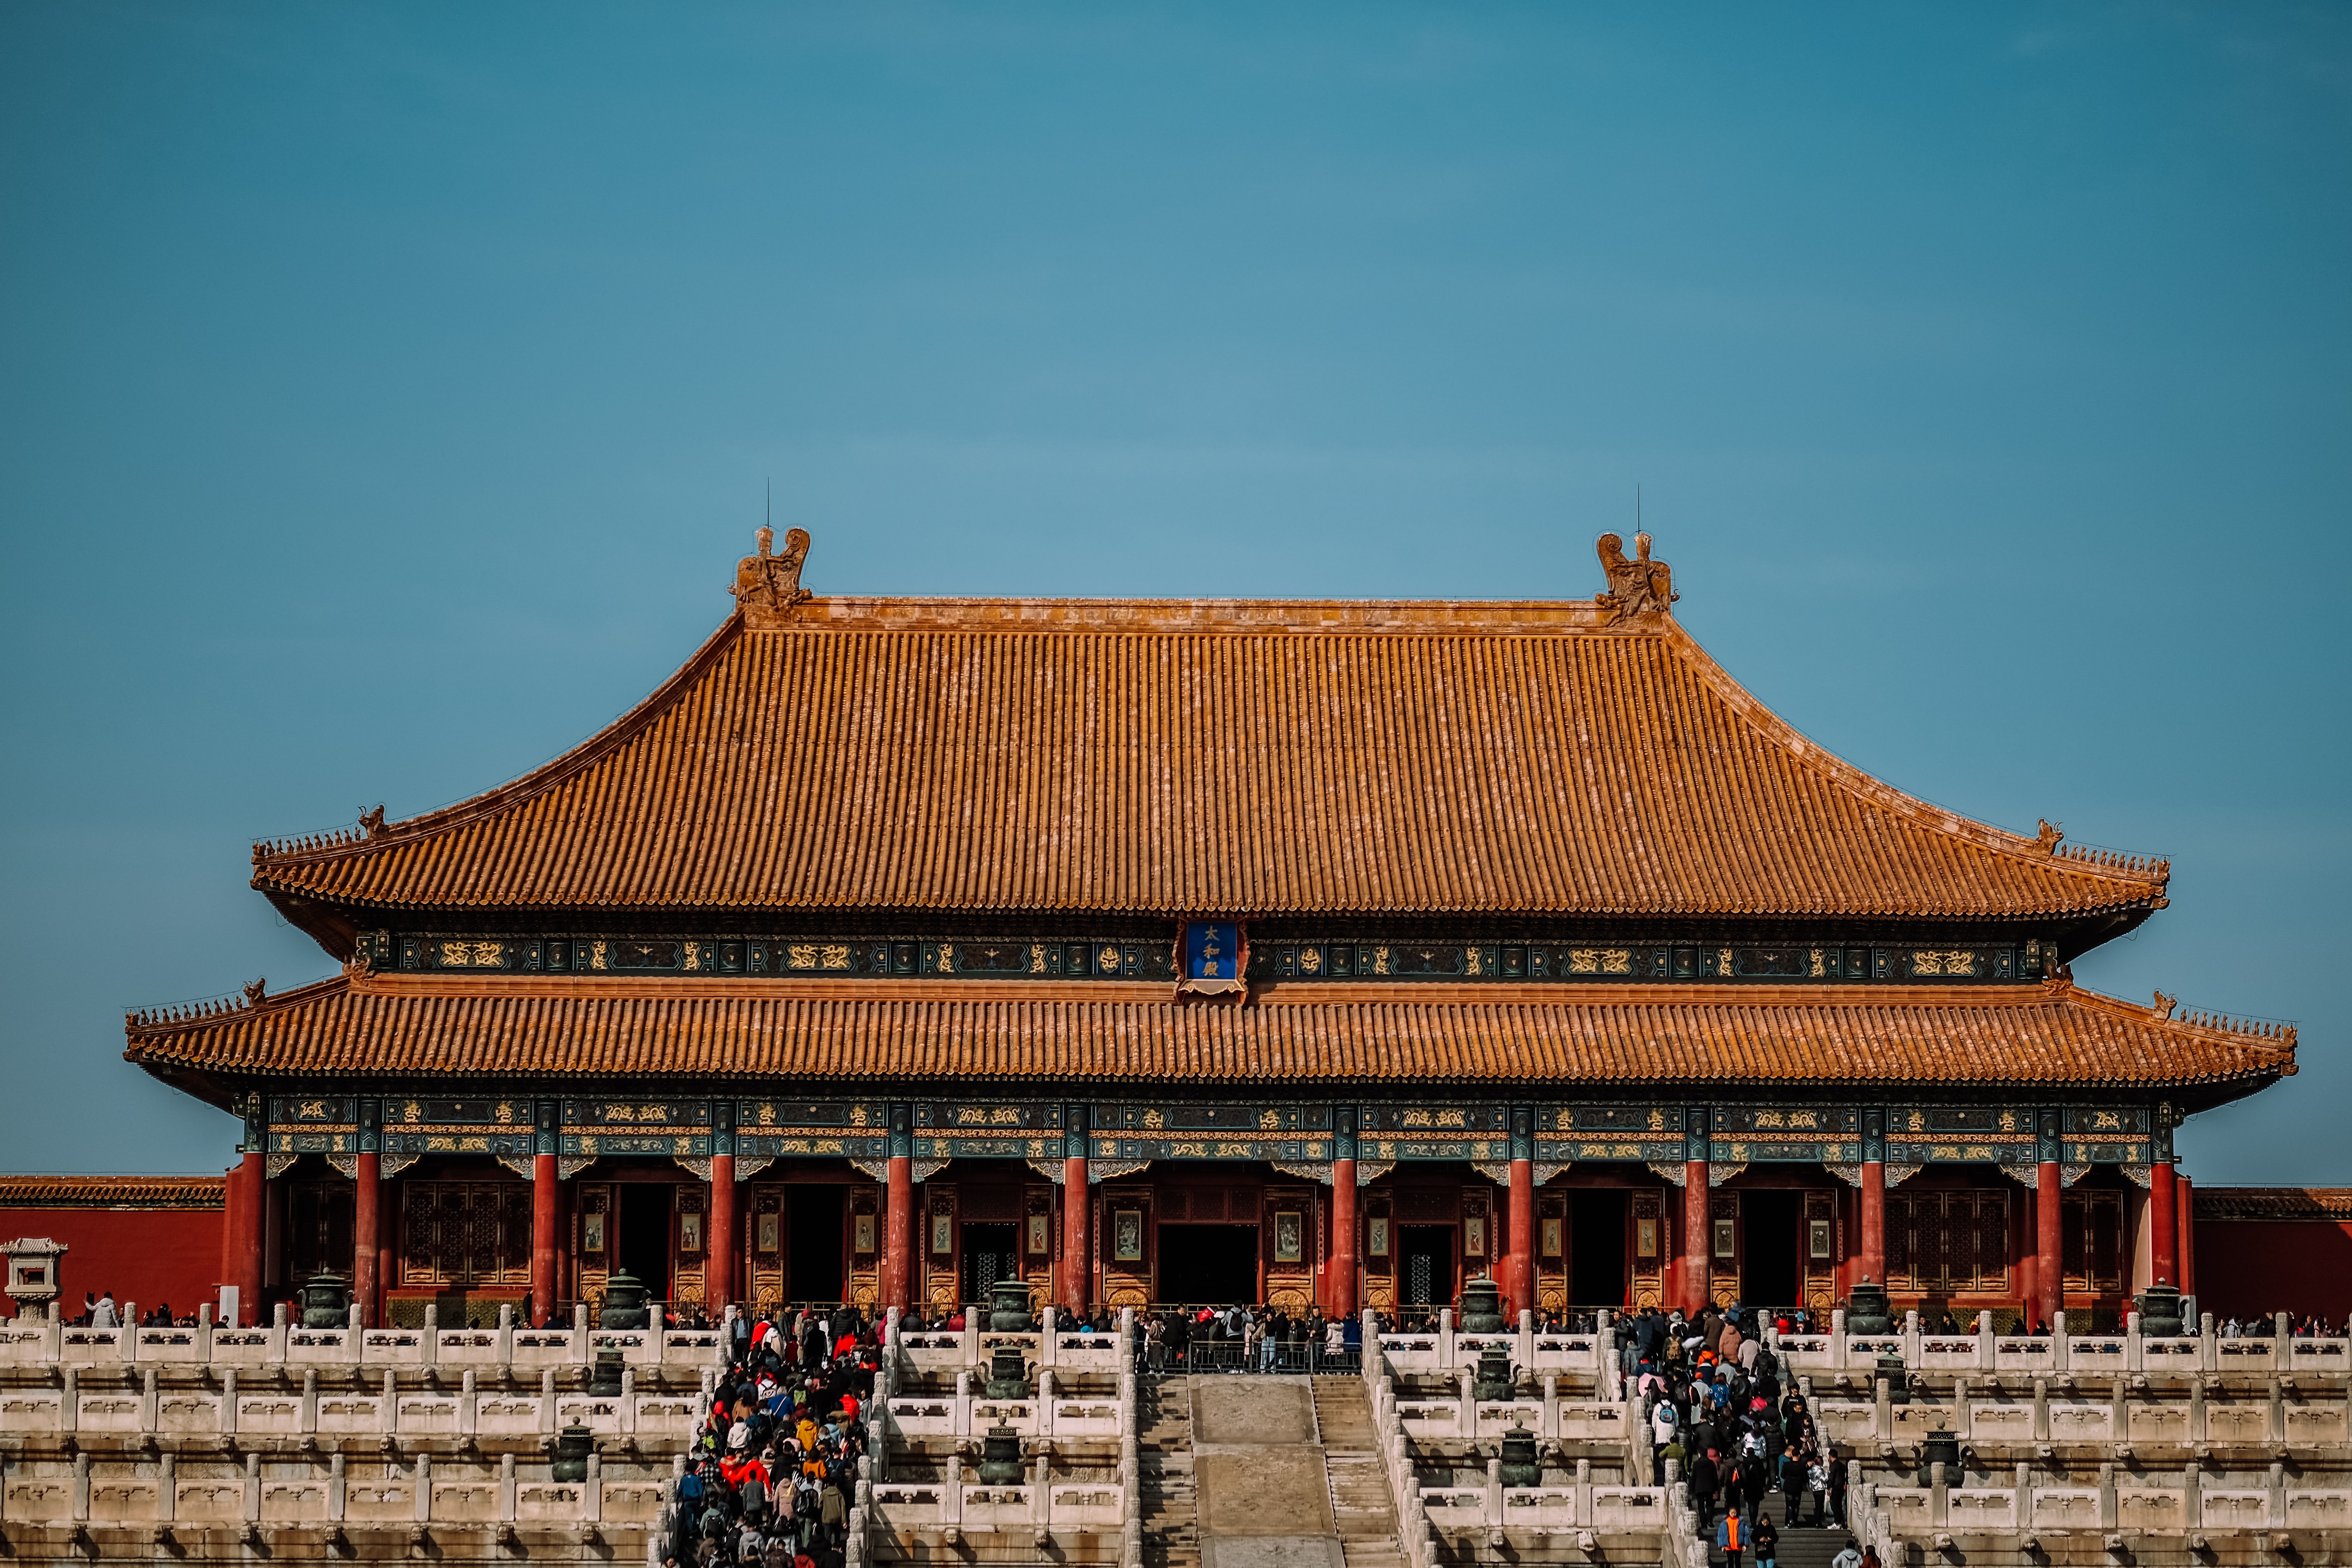 Day3 : Free day in Beijing (Forbidden City)